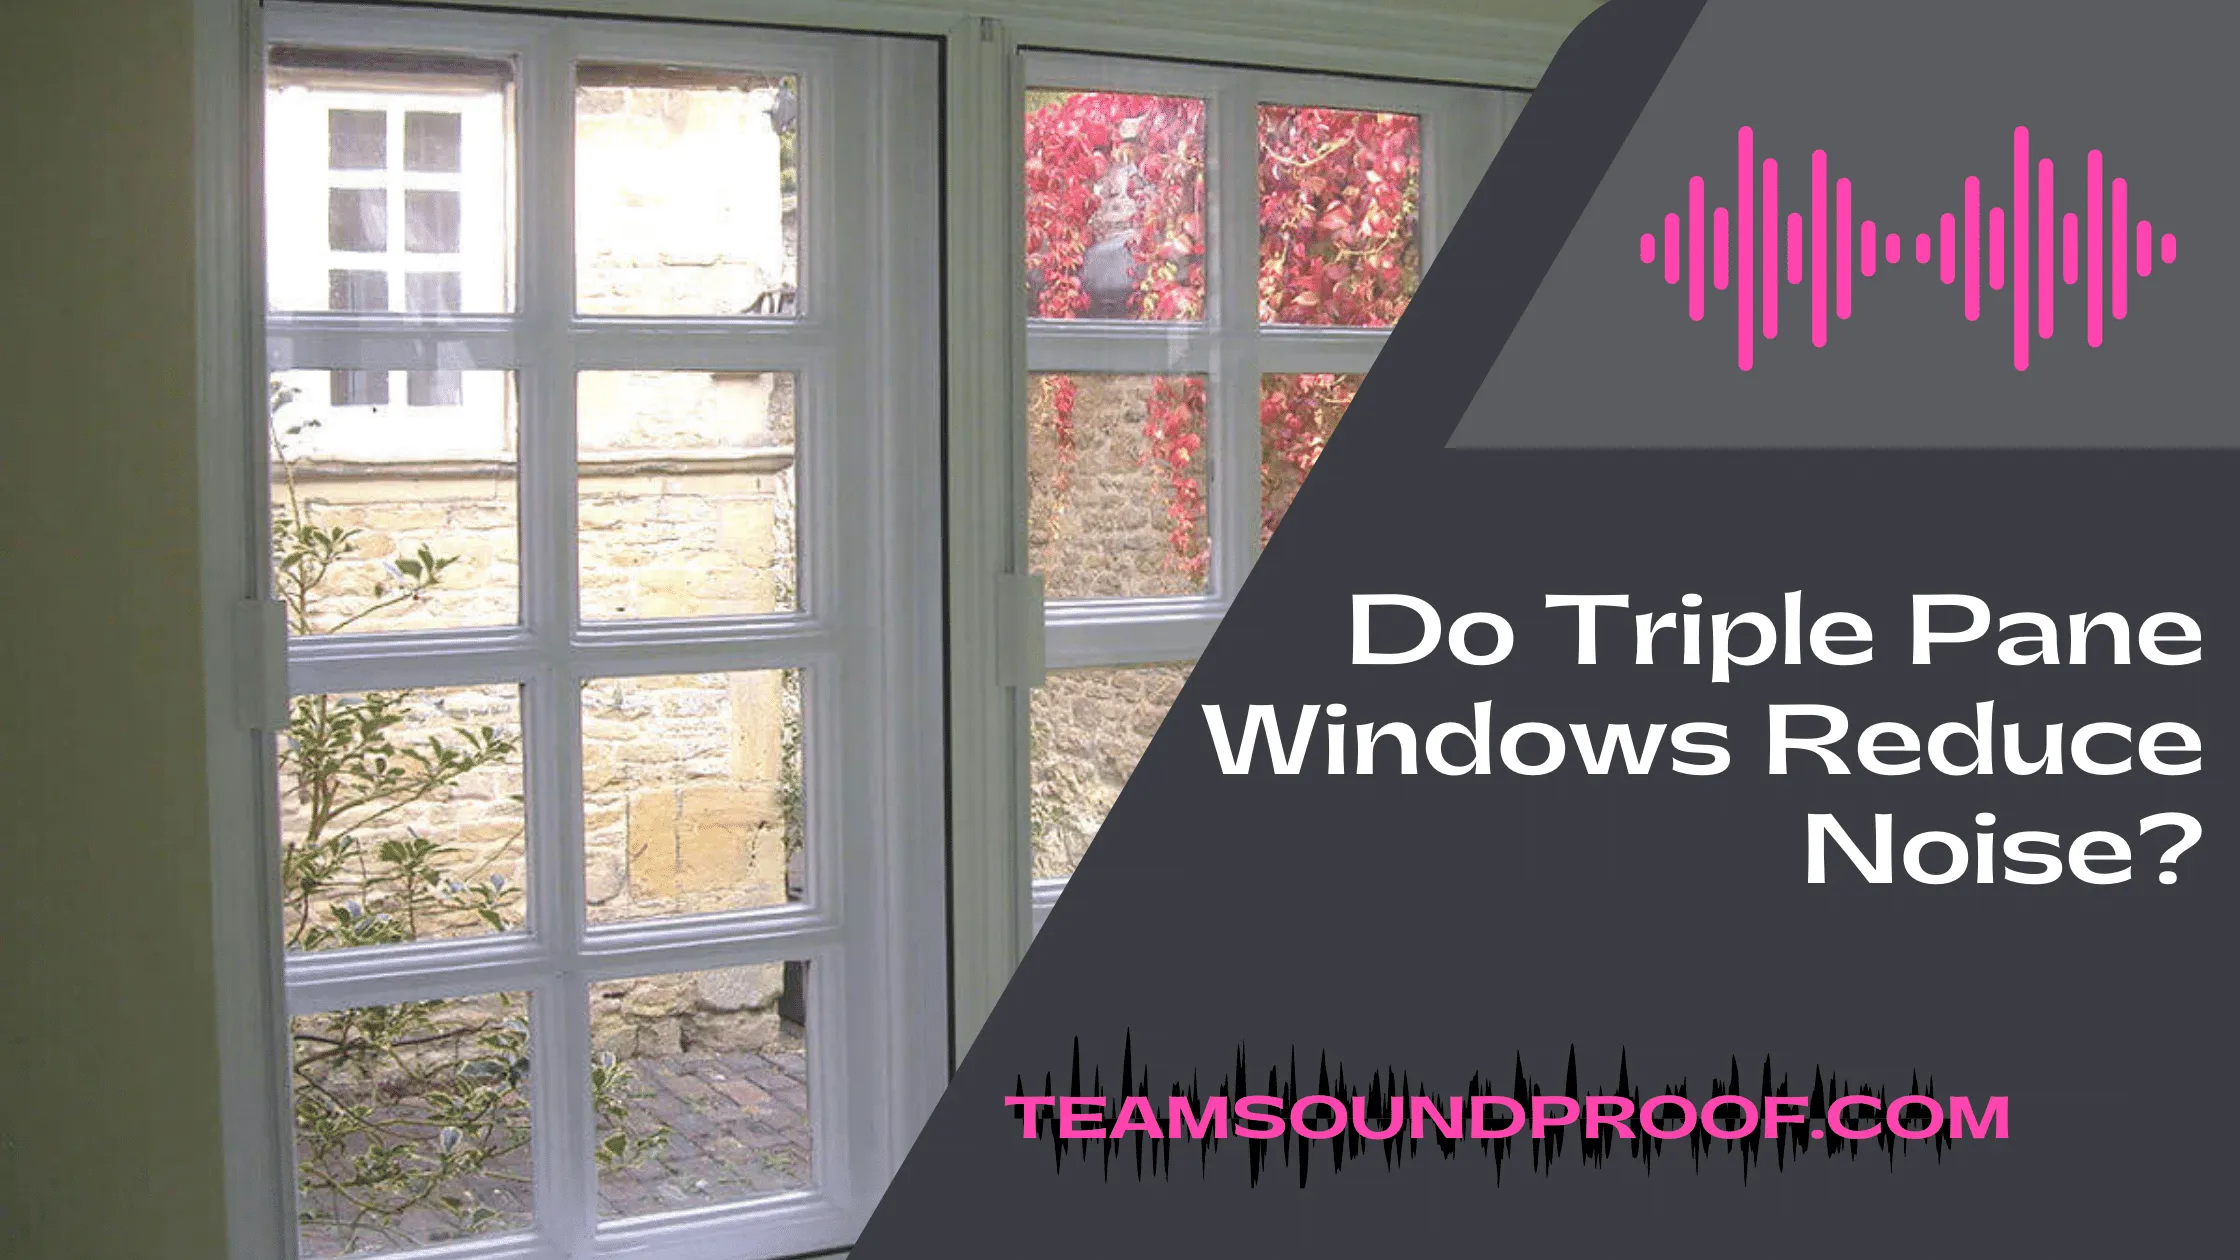 Do Triple Pane Windows Reduce Noise? - Simple Guide